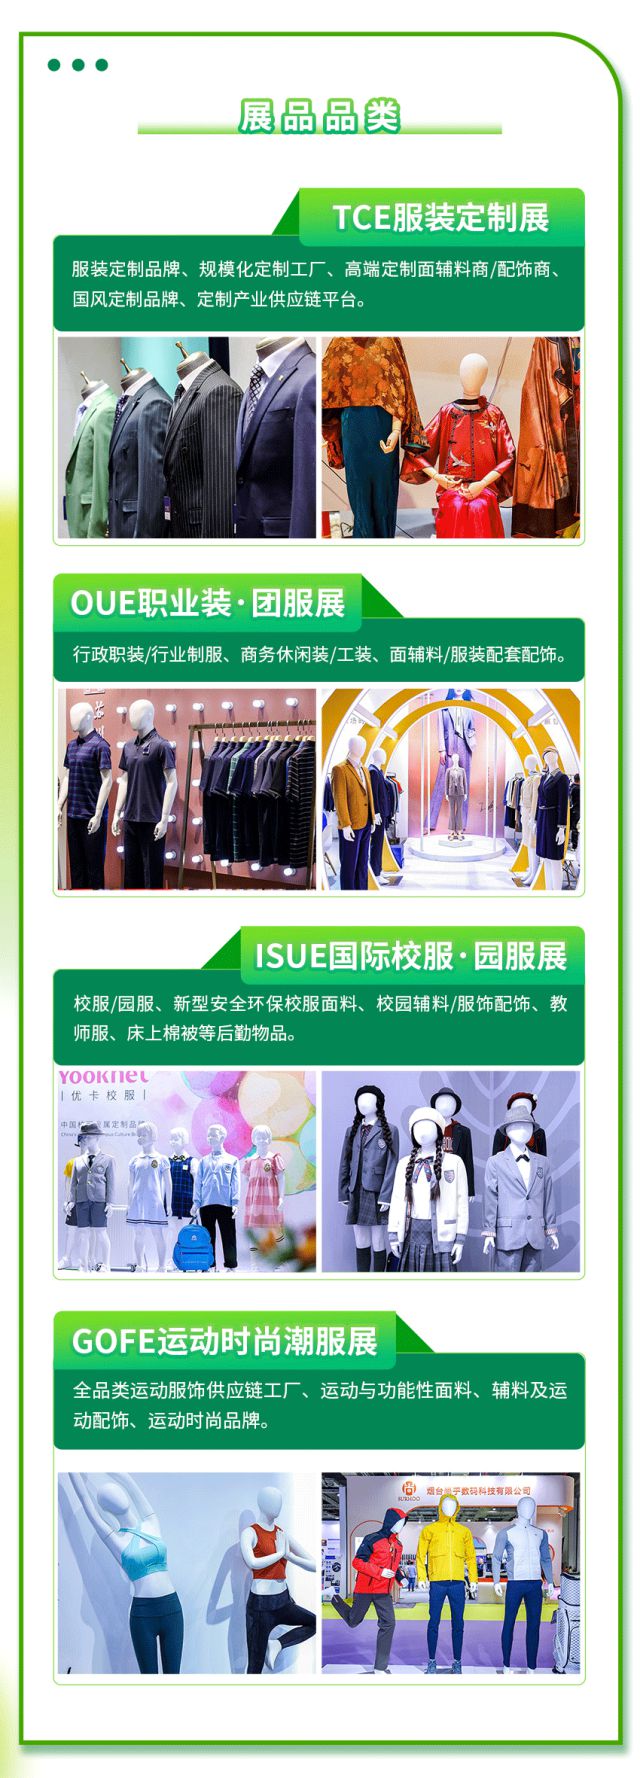 LINK FASHION服装展会·成都邀您11月中国西部国际博览城见！(图3)